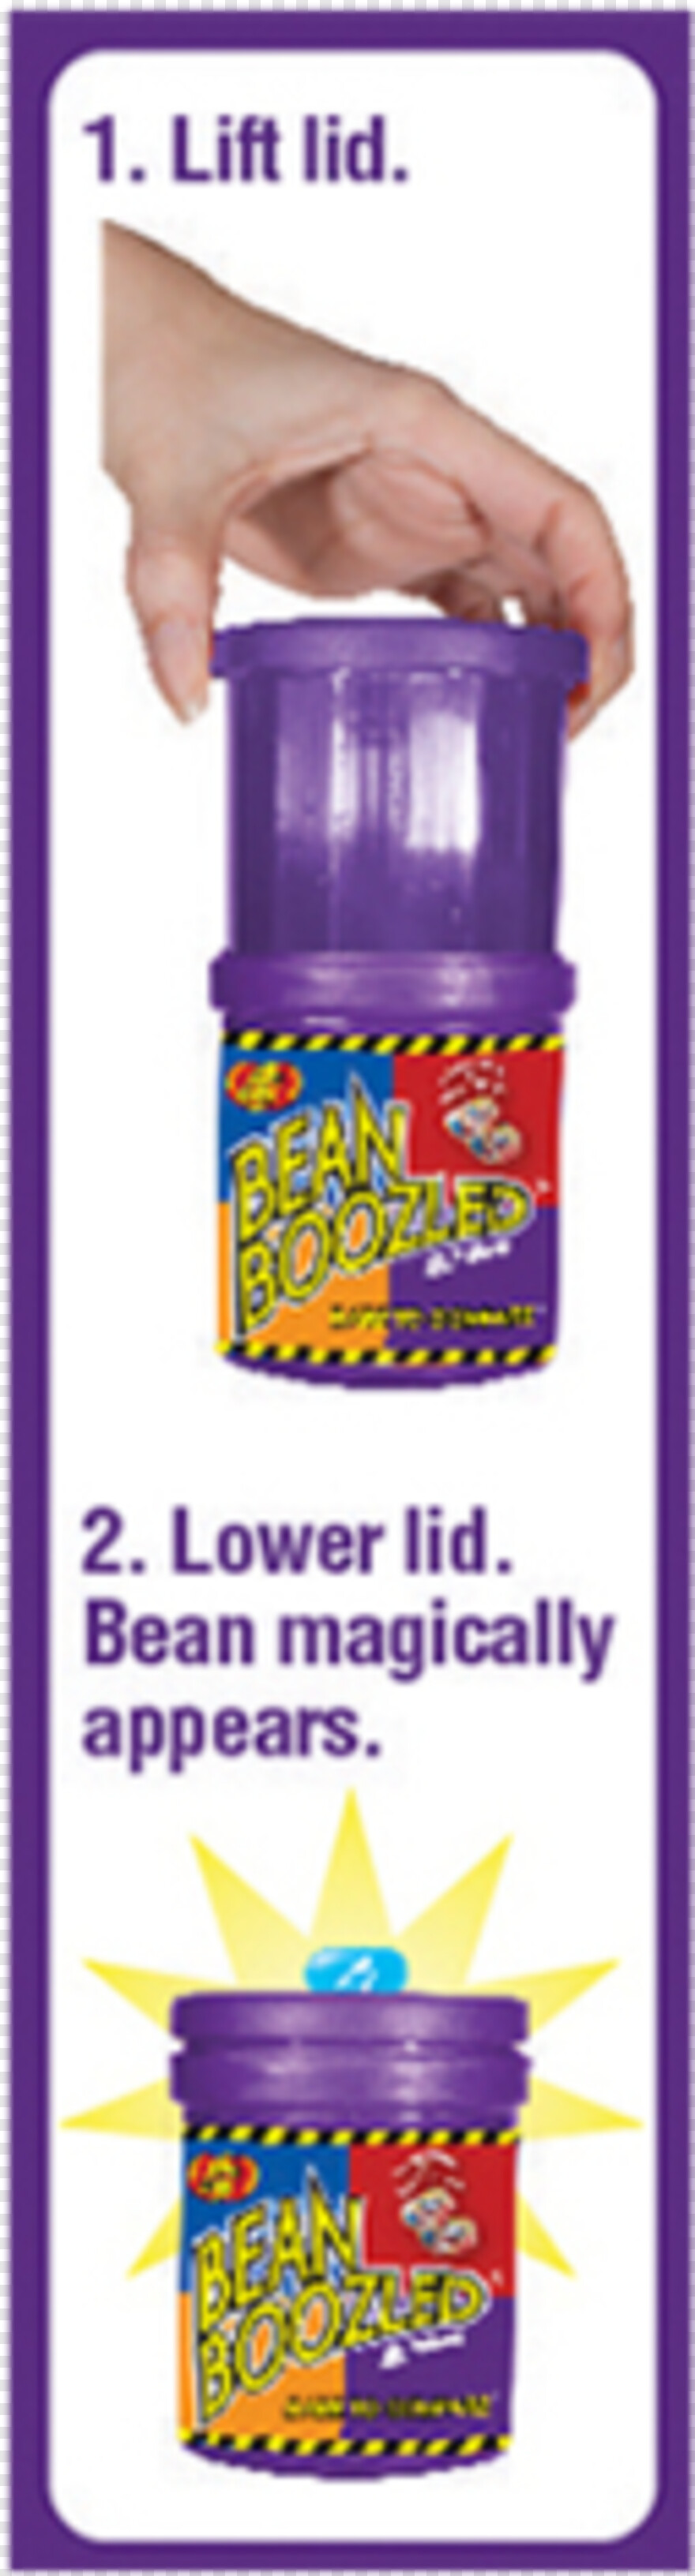 jelly-bean # 389230